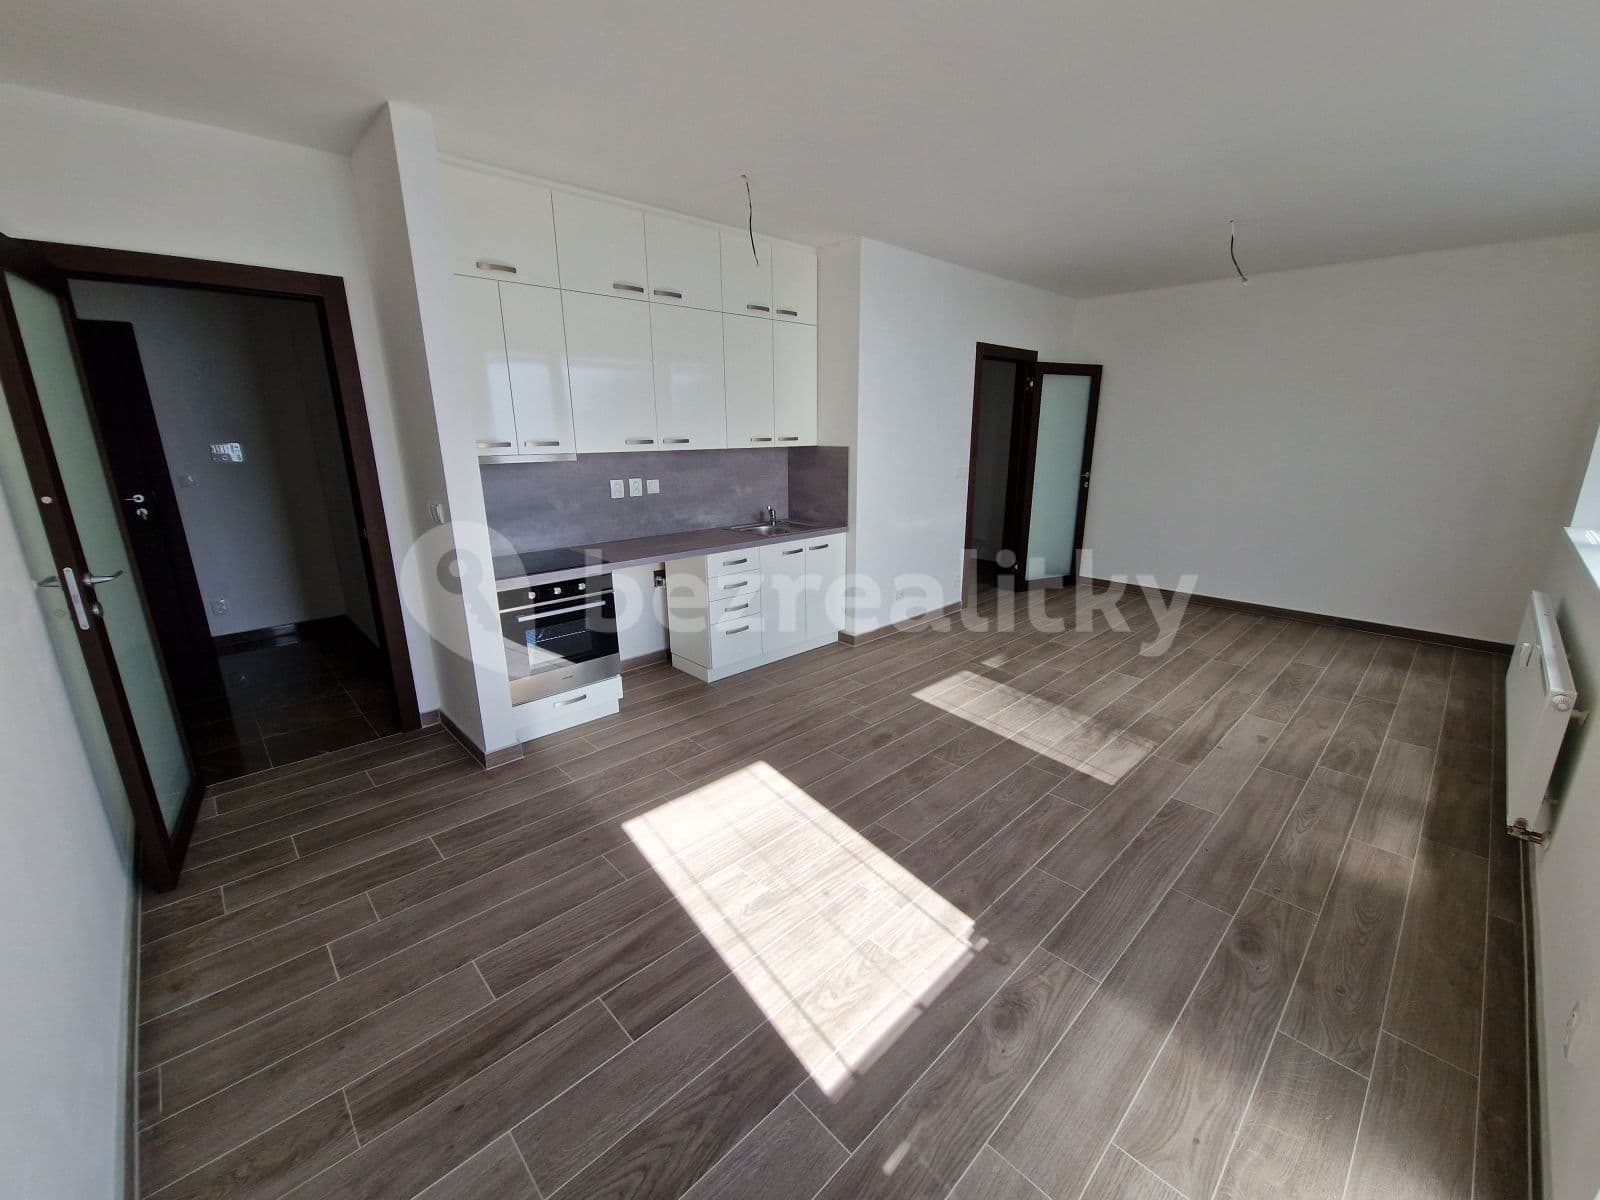 1 bedroom with open-plan kitchen flat to rent, 49 m², Husova, Žatec, Ústecký Region